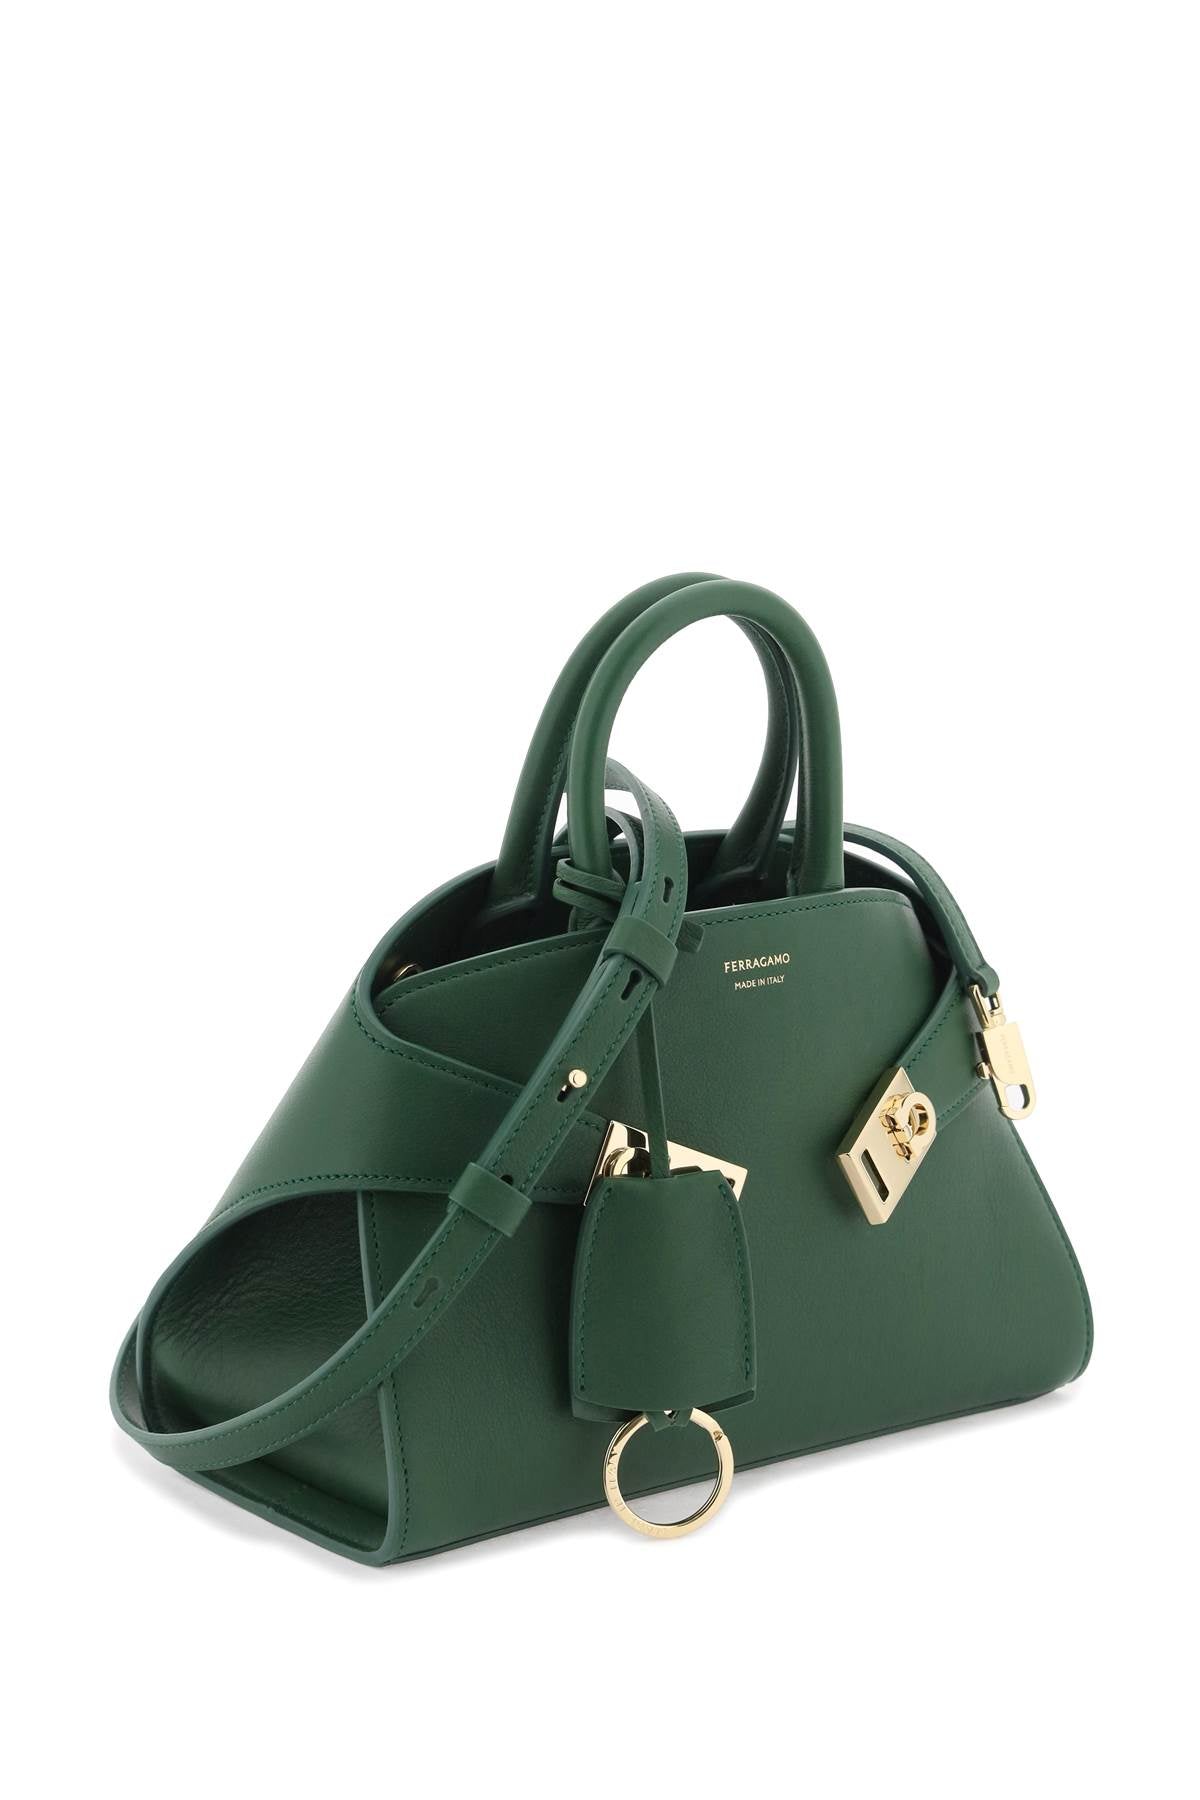 FERRAGAMO Chic Mini Leather Handbag with Gold Gancini Clasp and Adjustable Strap - Spring Green